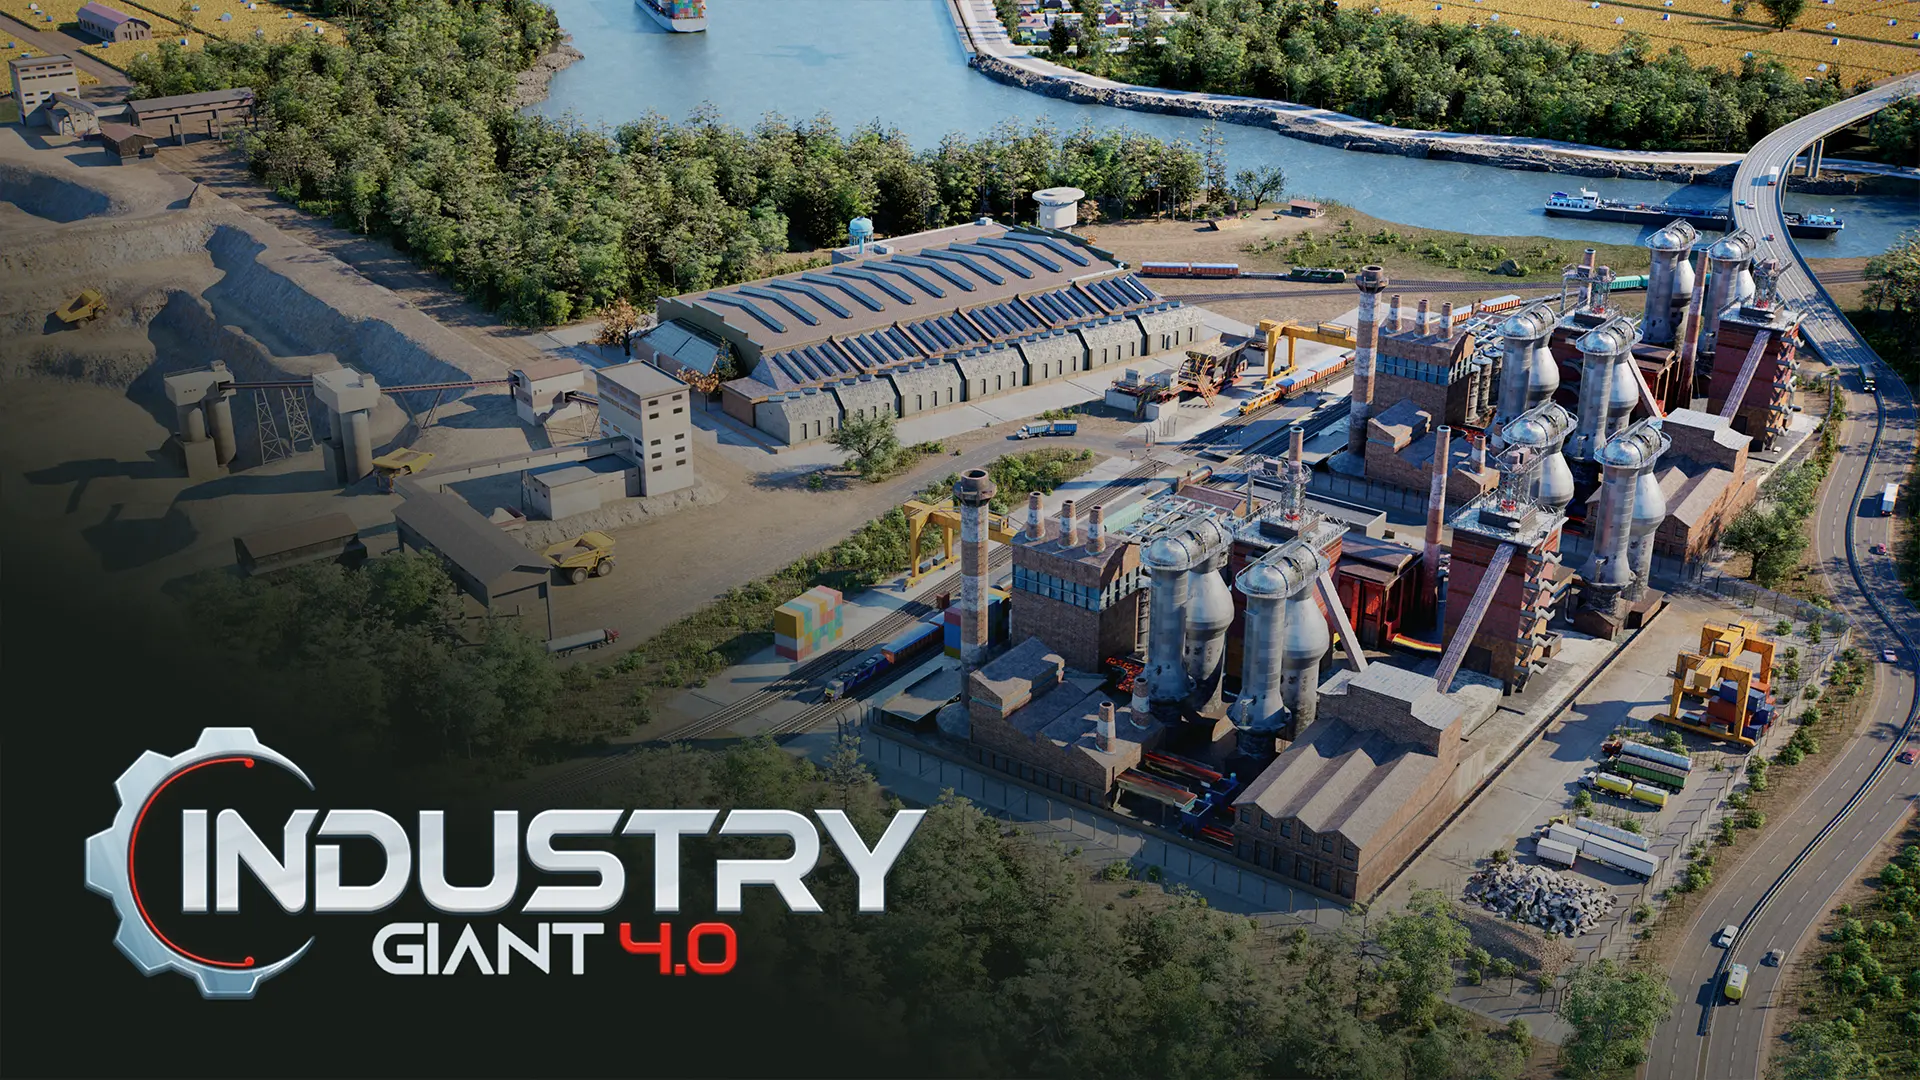 Industry Giant 4